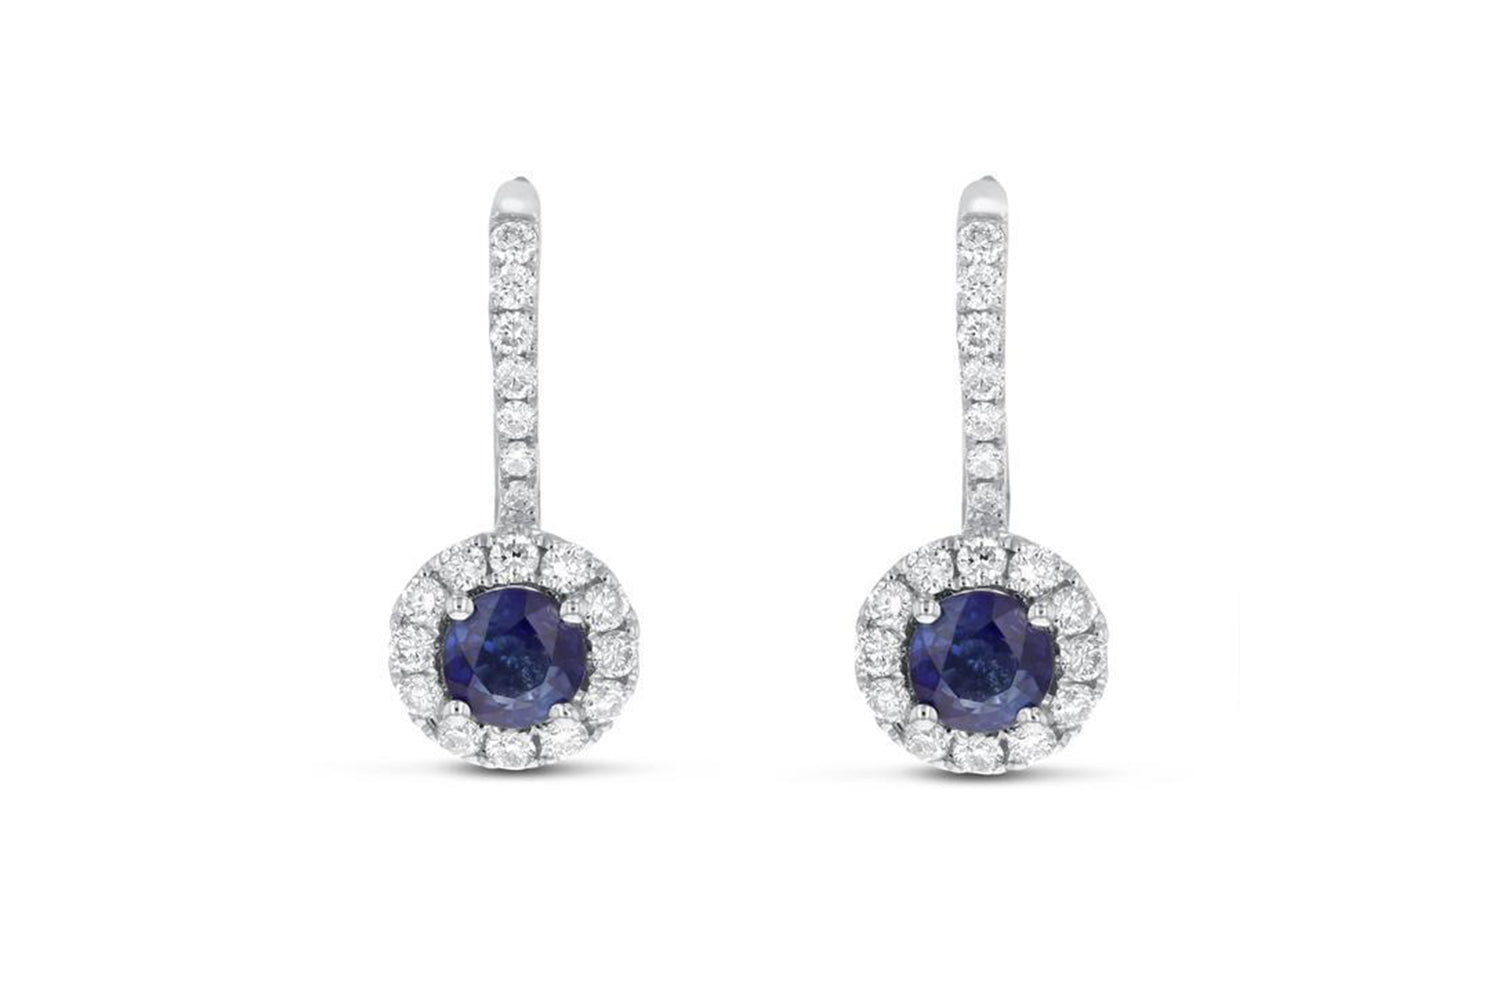 18K White Gold Sapphire & Diamond Earrings, 1.21 Carats